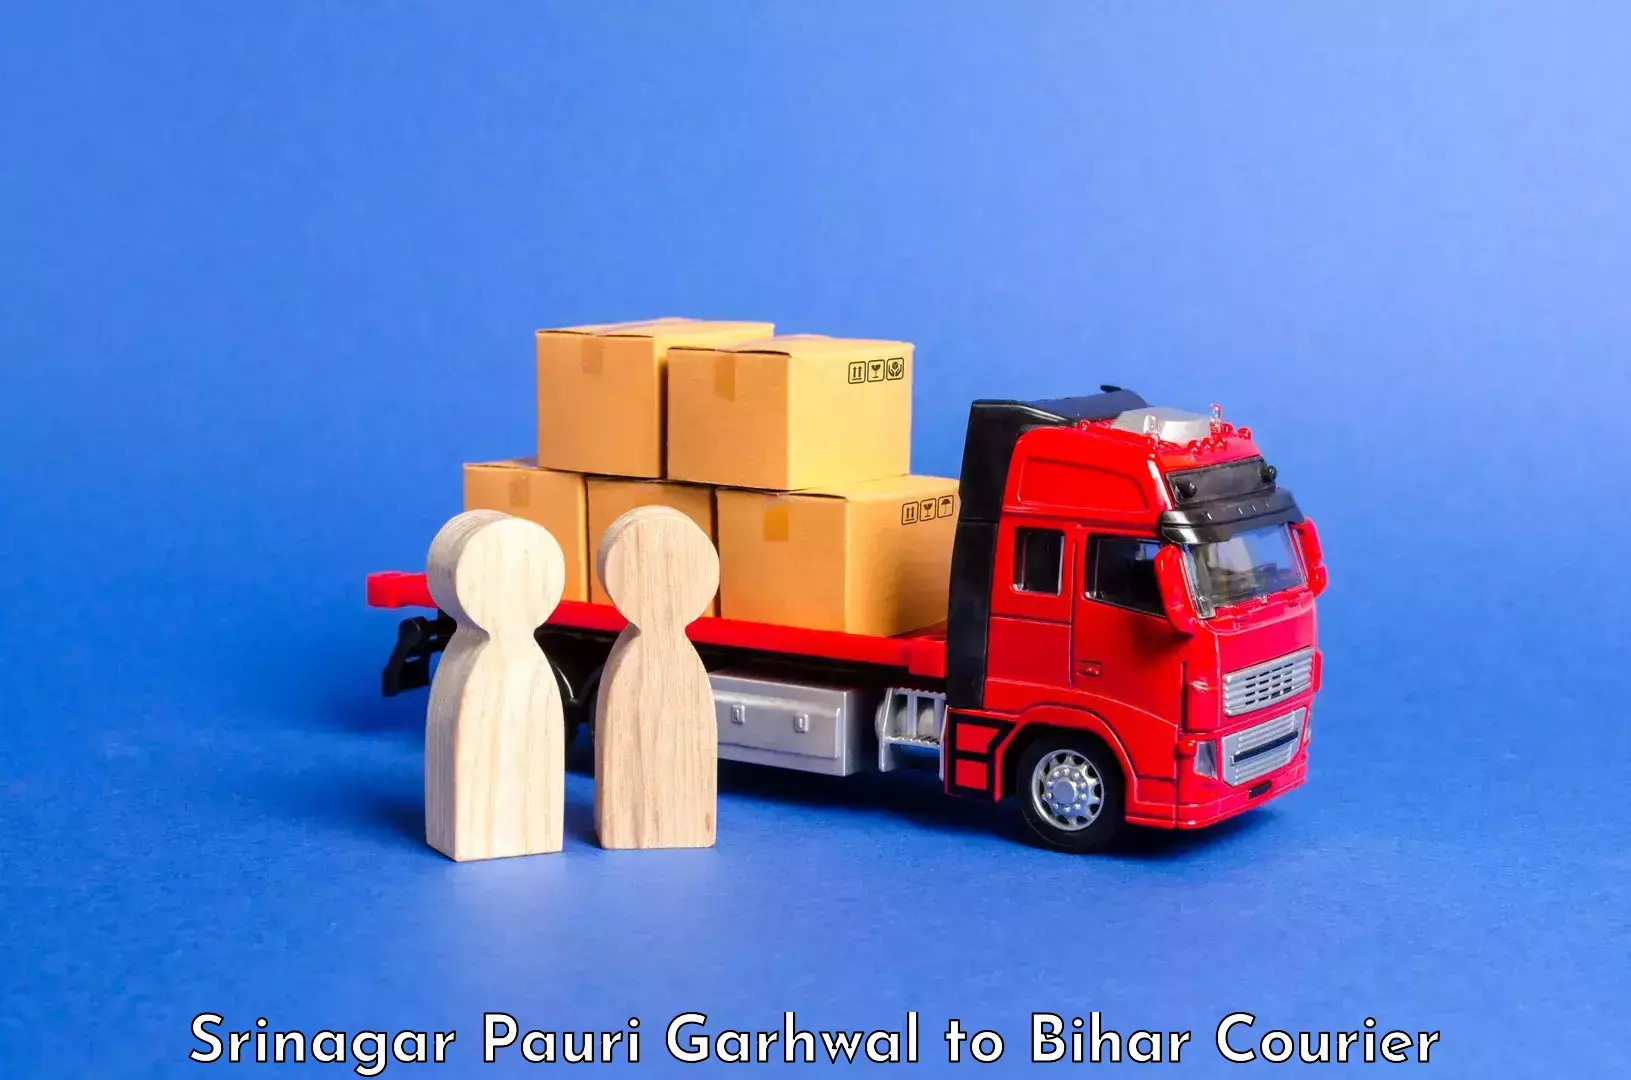 Luggage delivery app Srinagar Pauri Garhwal to Kishunganj